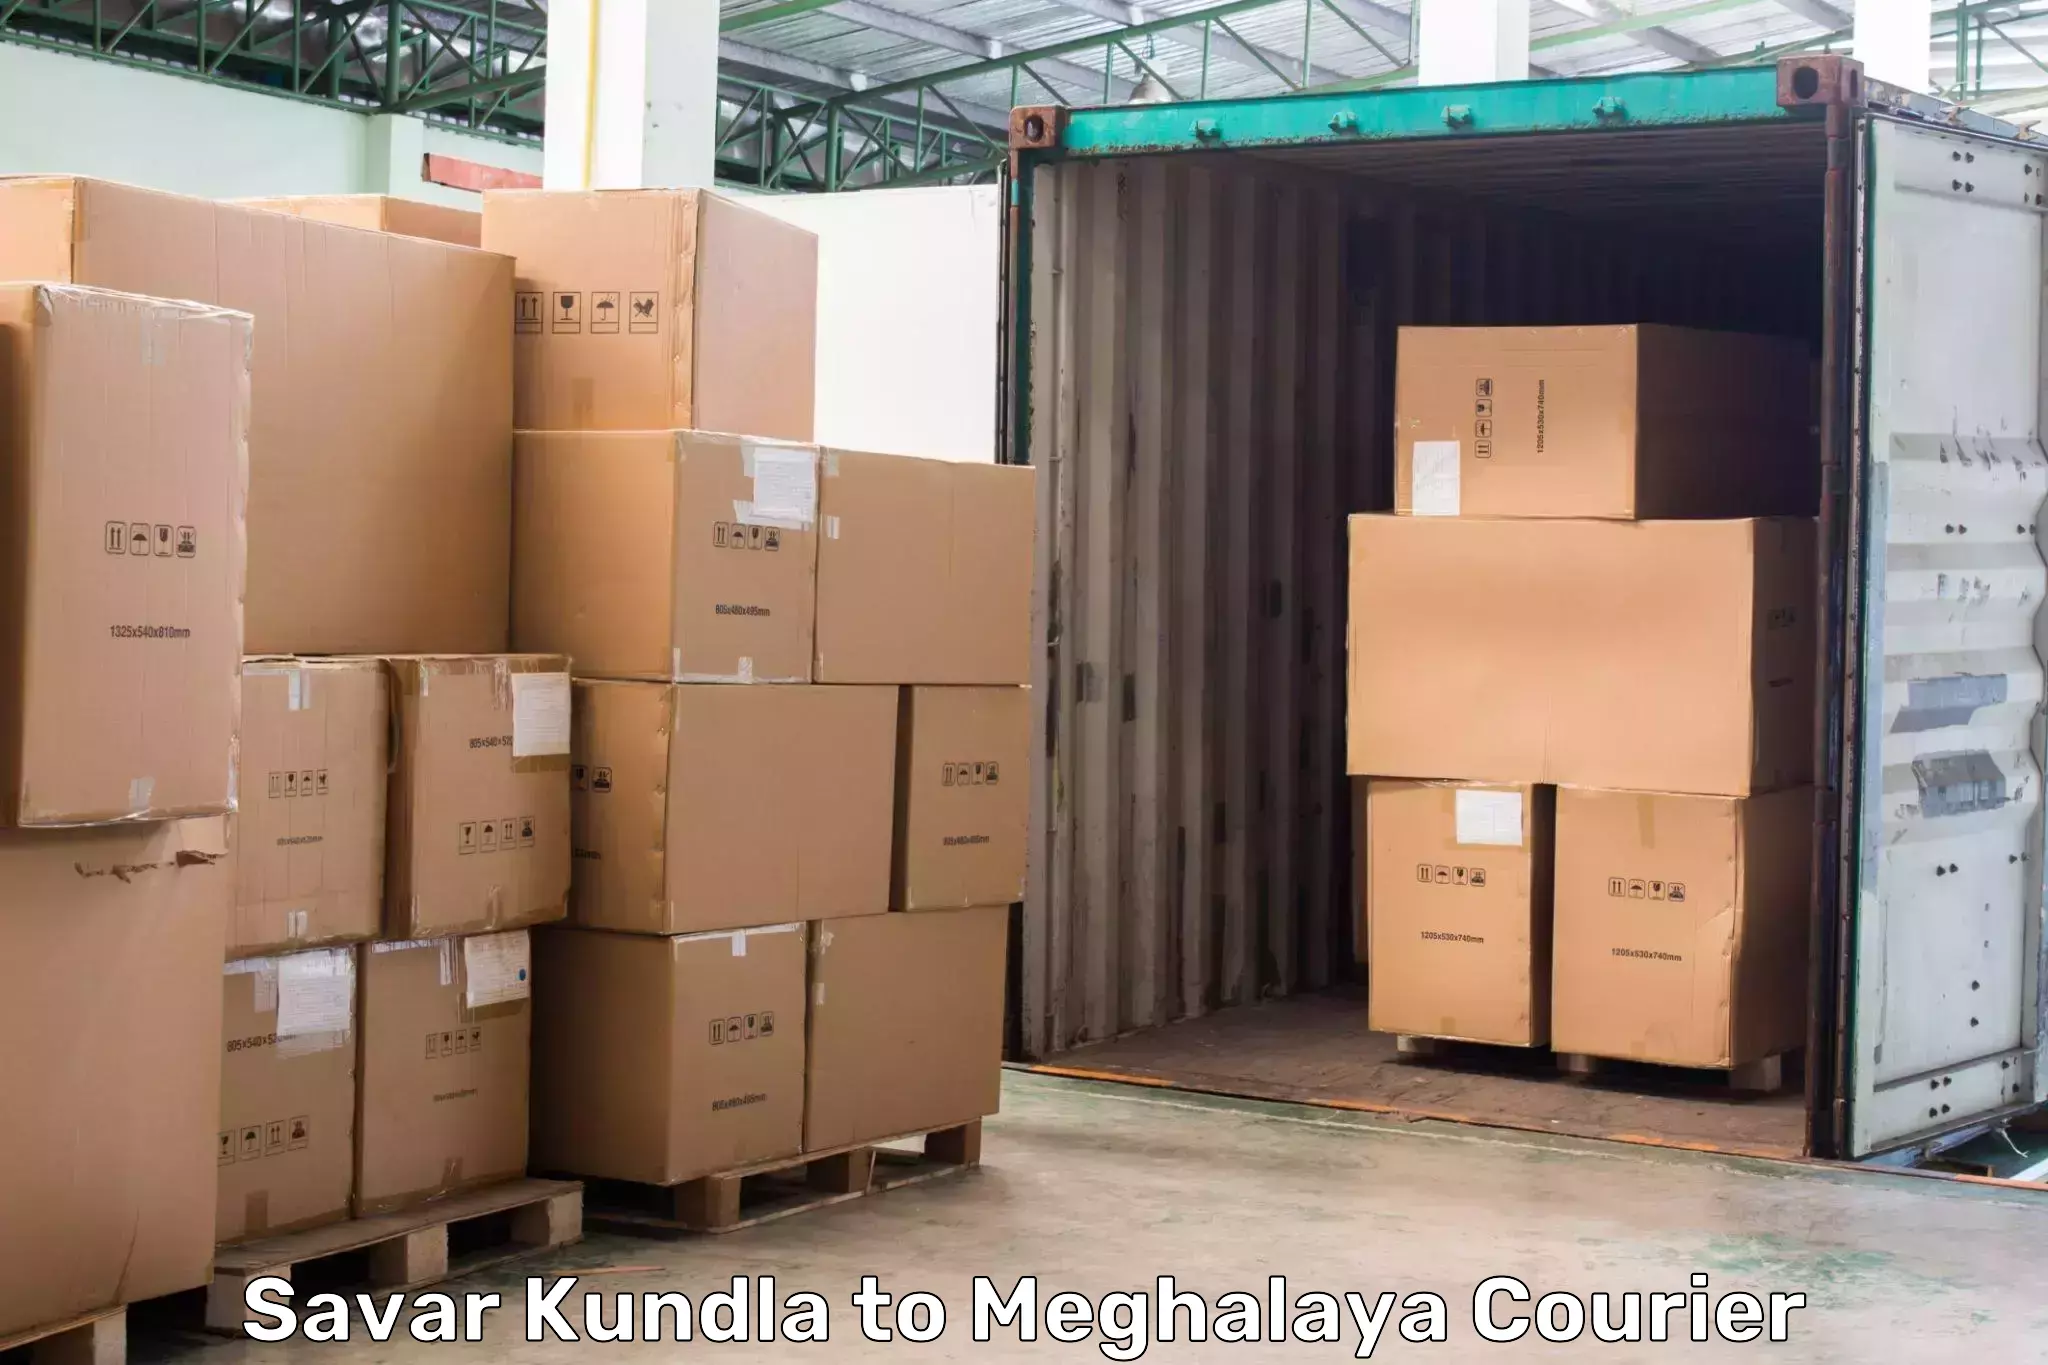 High-speed parcel service Savar Kundla to Tura